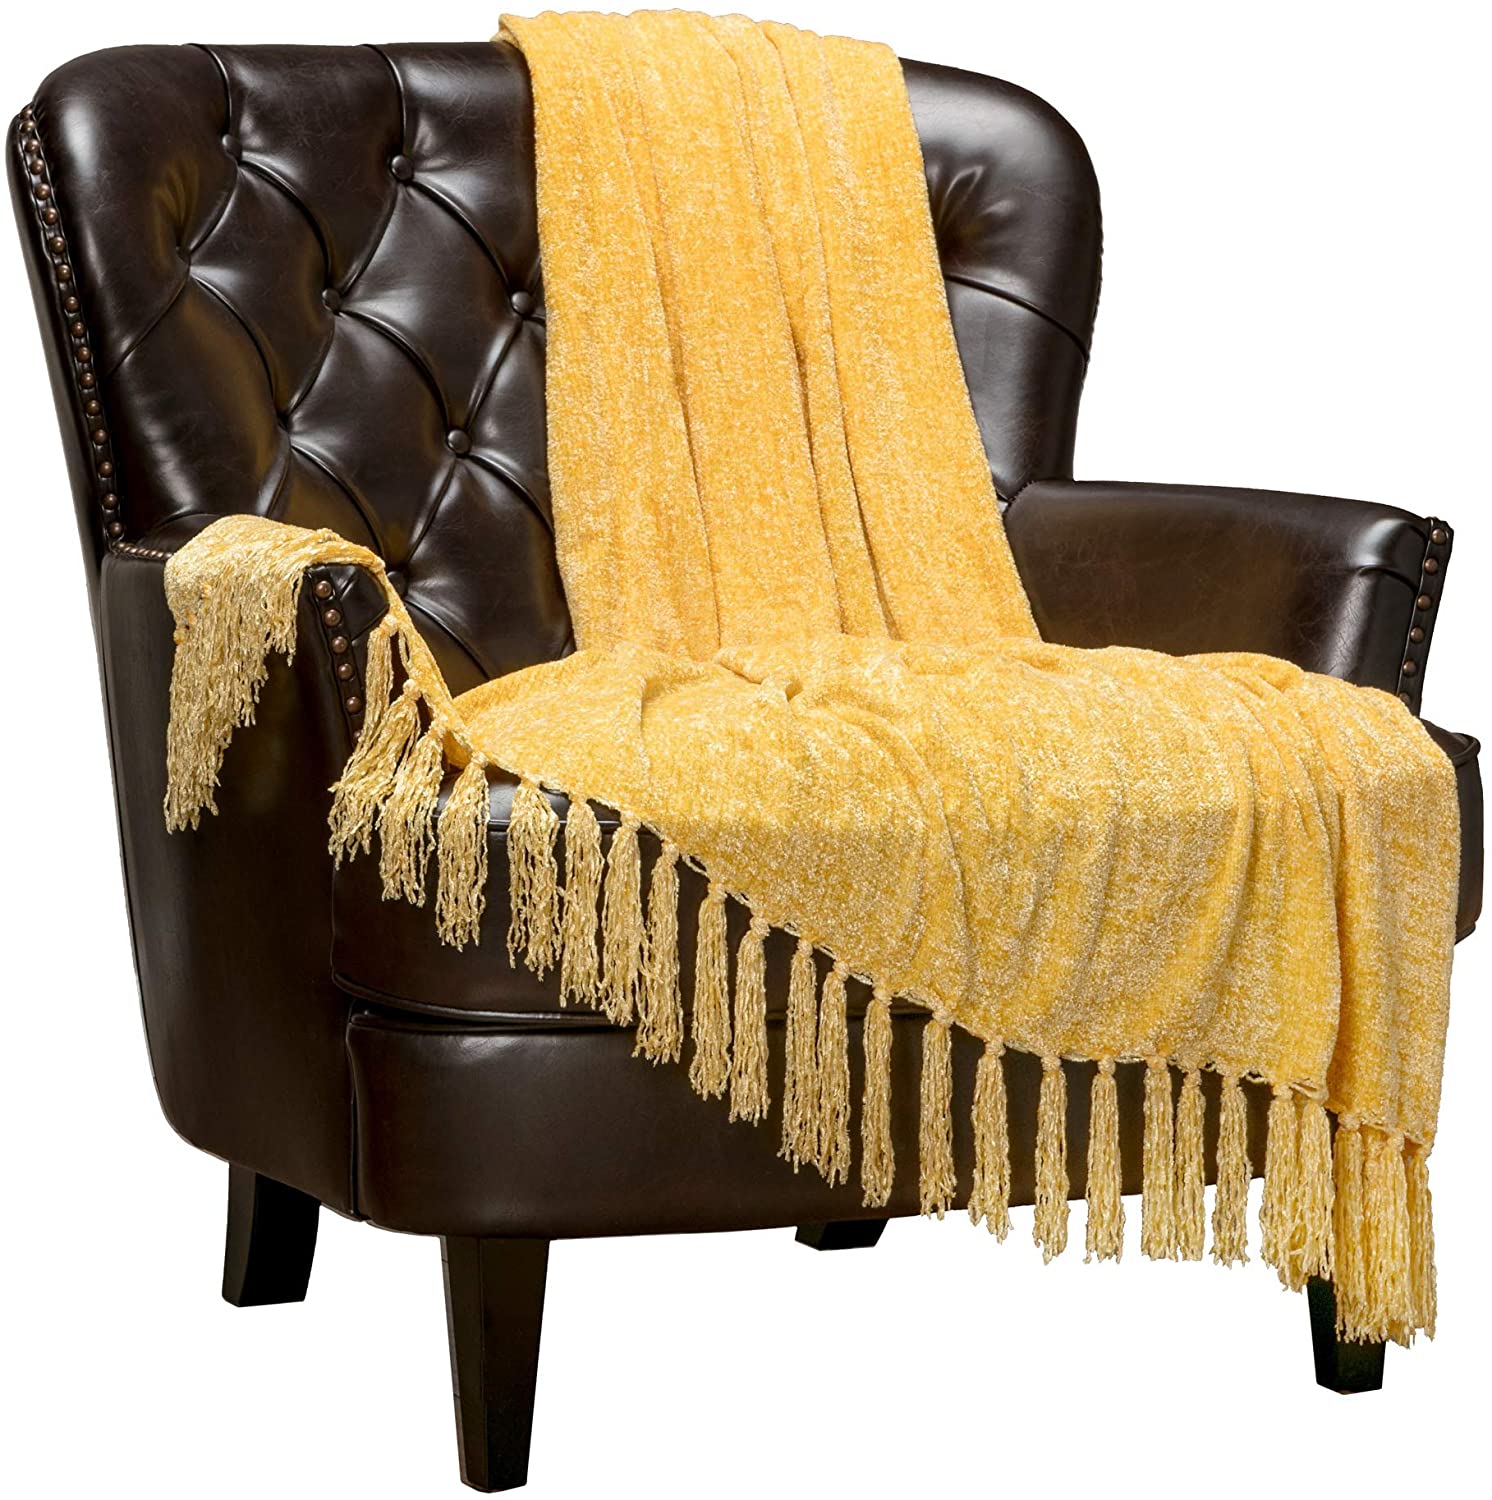 Chanasya Chenille Velvety Texture Decorative Throw Blanket with 